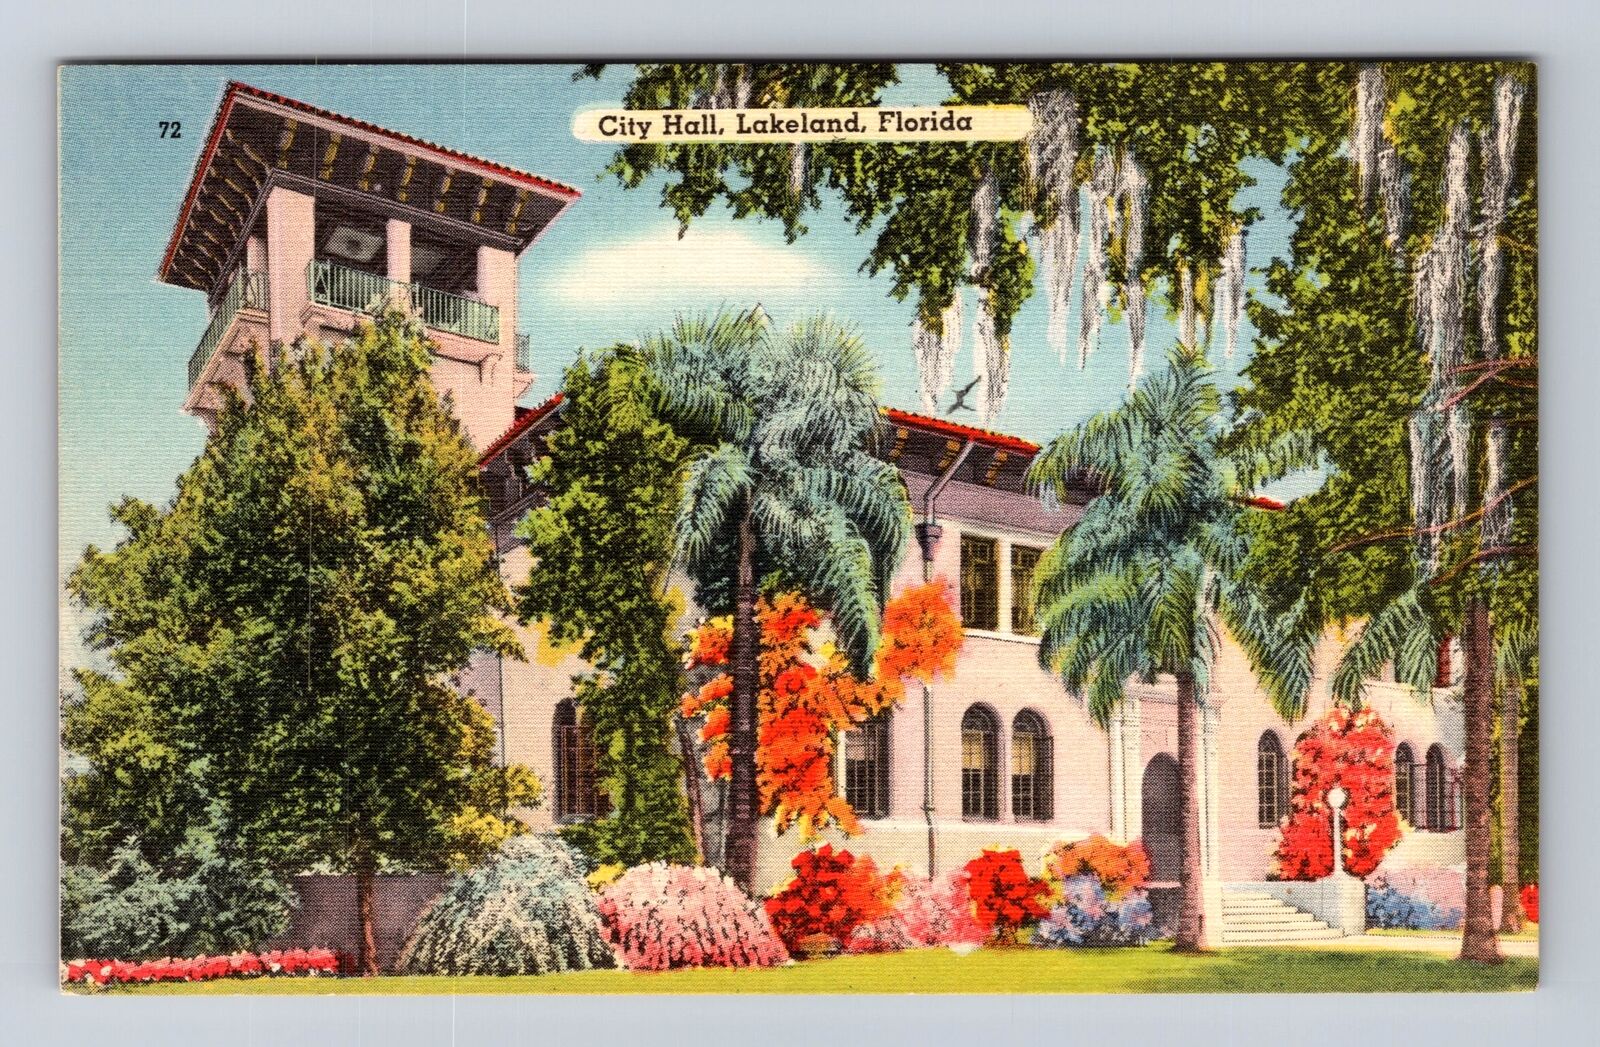 Lakeland FL-Florida, Tropical City Hall Building, Antique Vintage Postcard